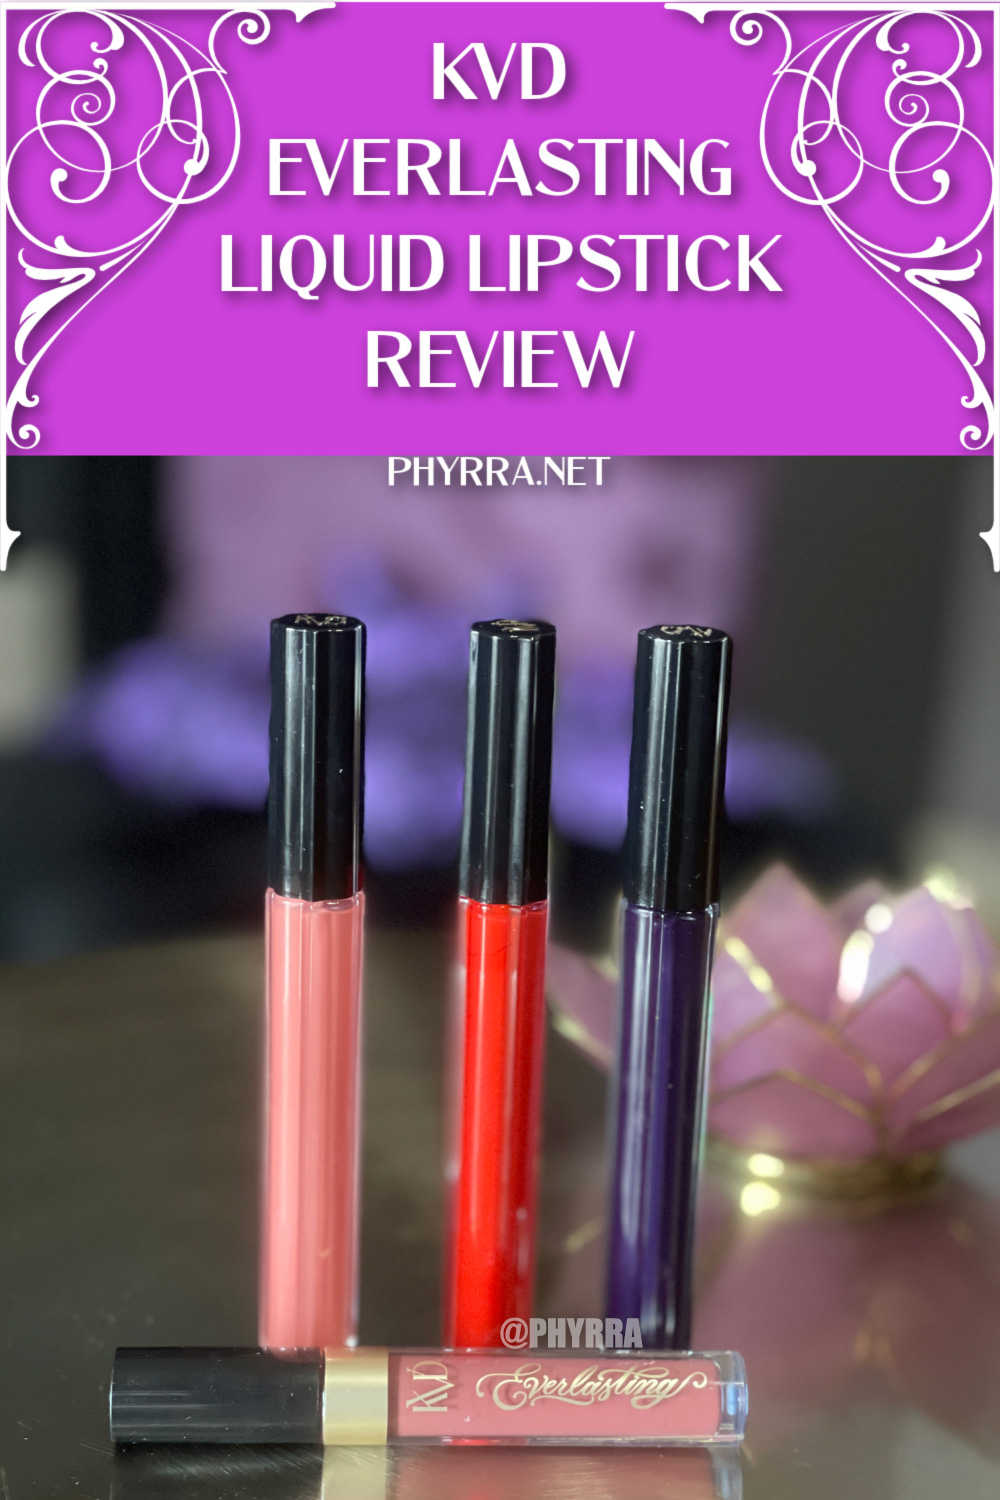 KVD Everlasting Hyperlight Liquid Lipstick Review and Swatches